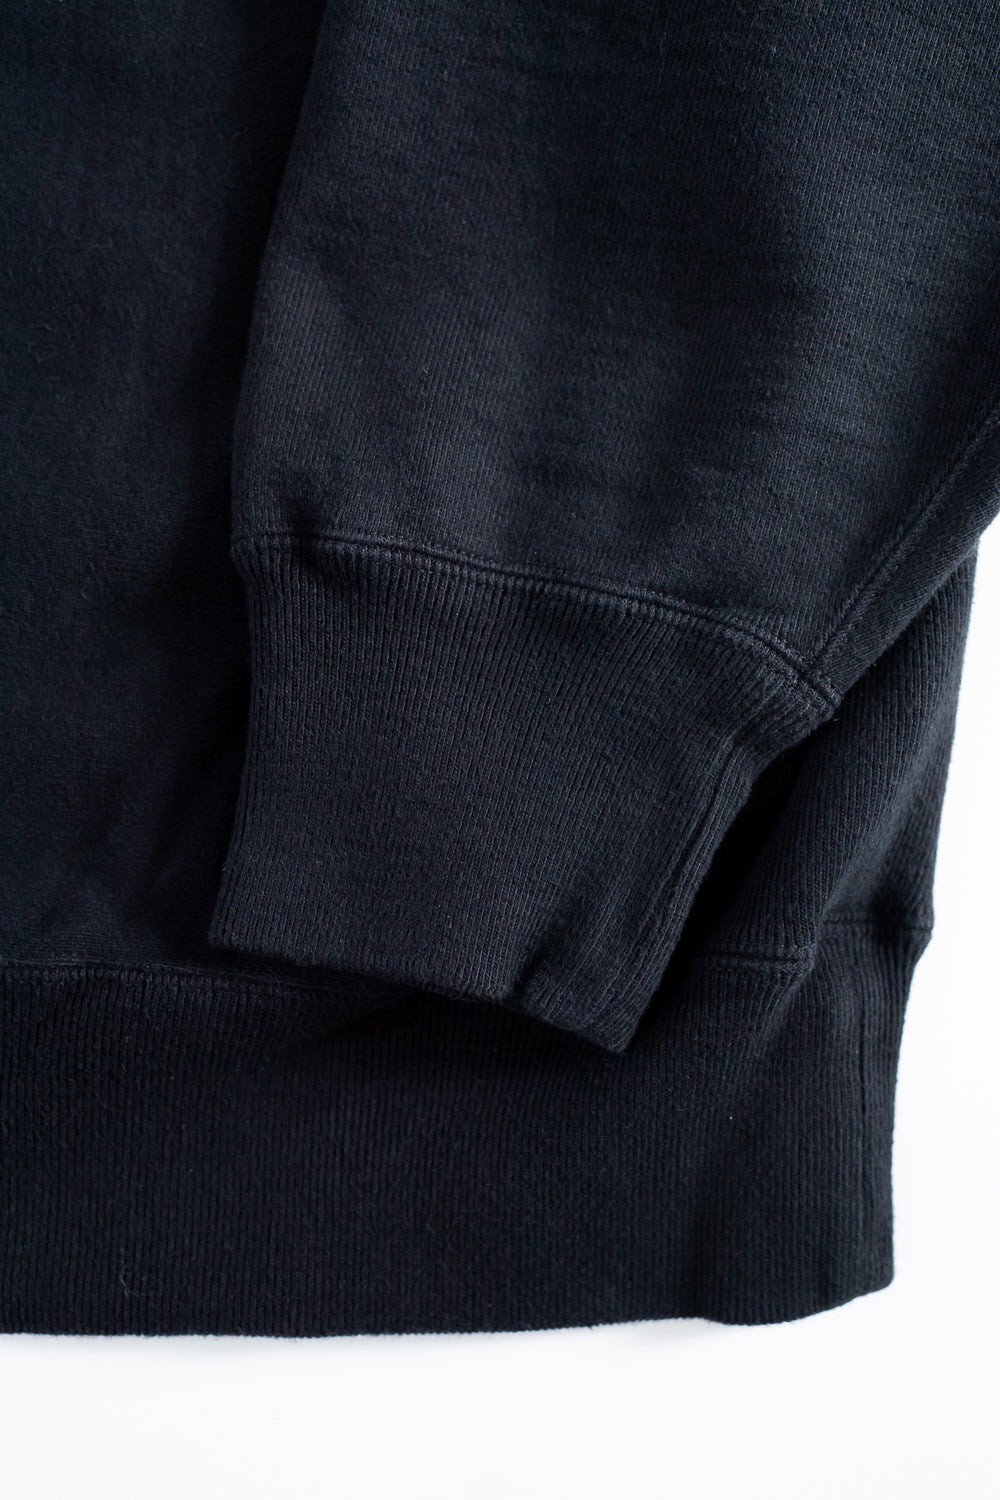 83-0030- 61K-JD - Loopwheel Crewneck Sweatshirt - Exclusive No-Print Black